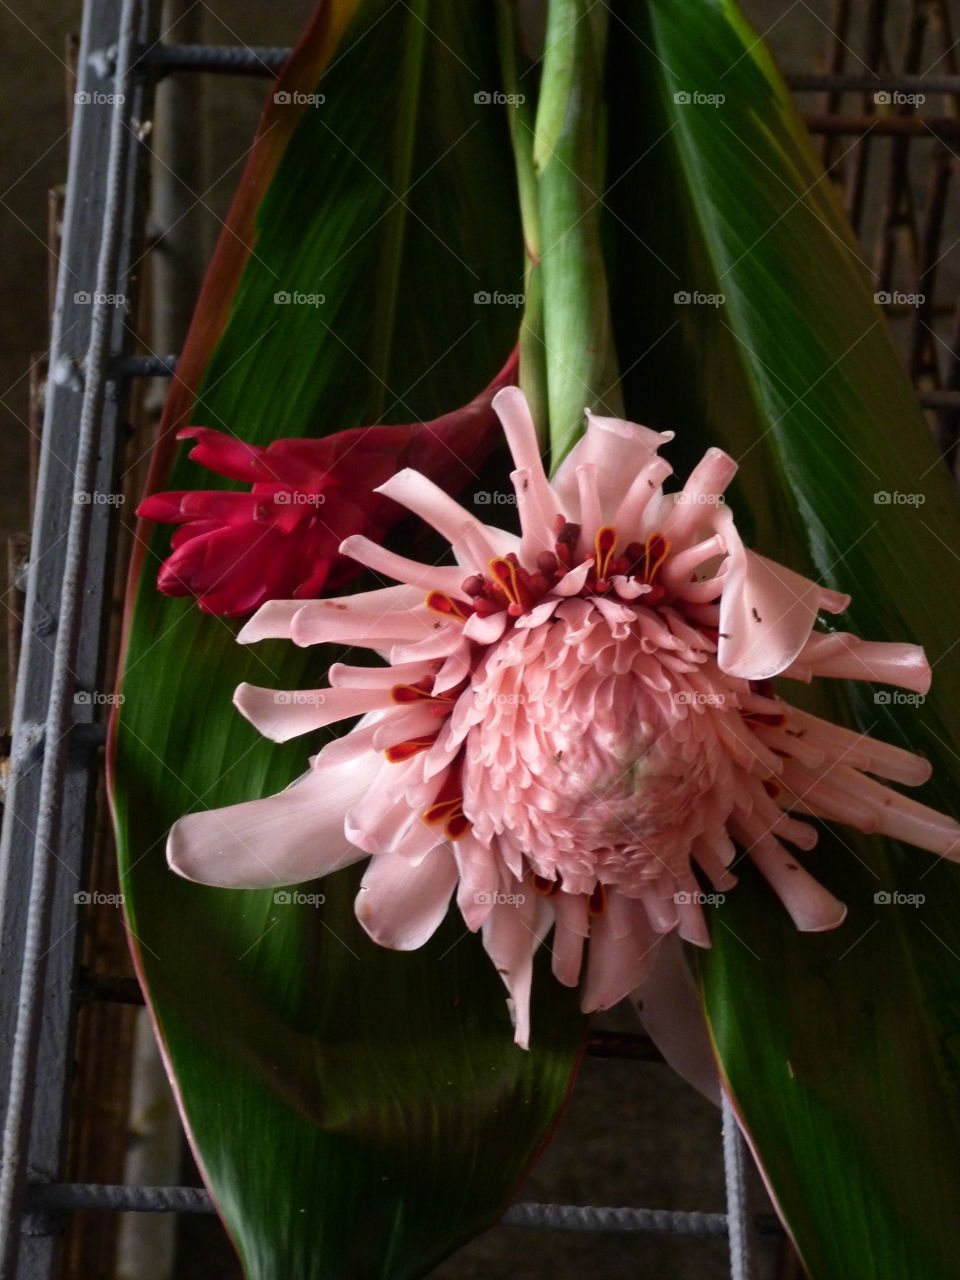 Costa Rican flower